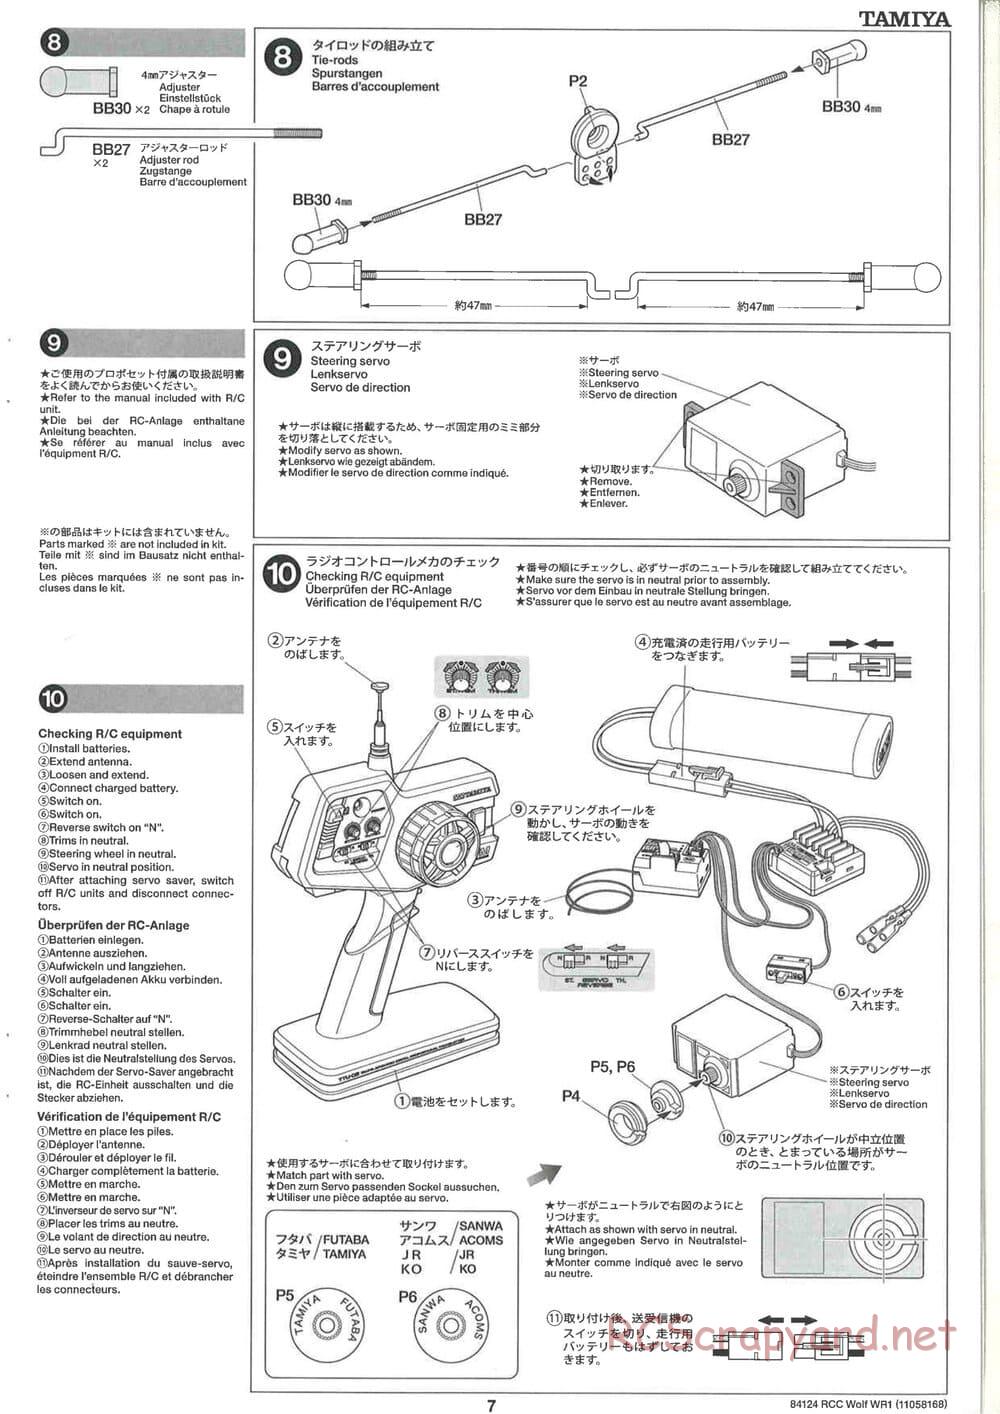 Tamiya - Wolf WR1 - F104W Chassis - Manual - Page 7